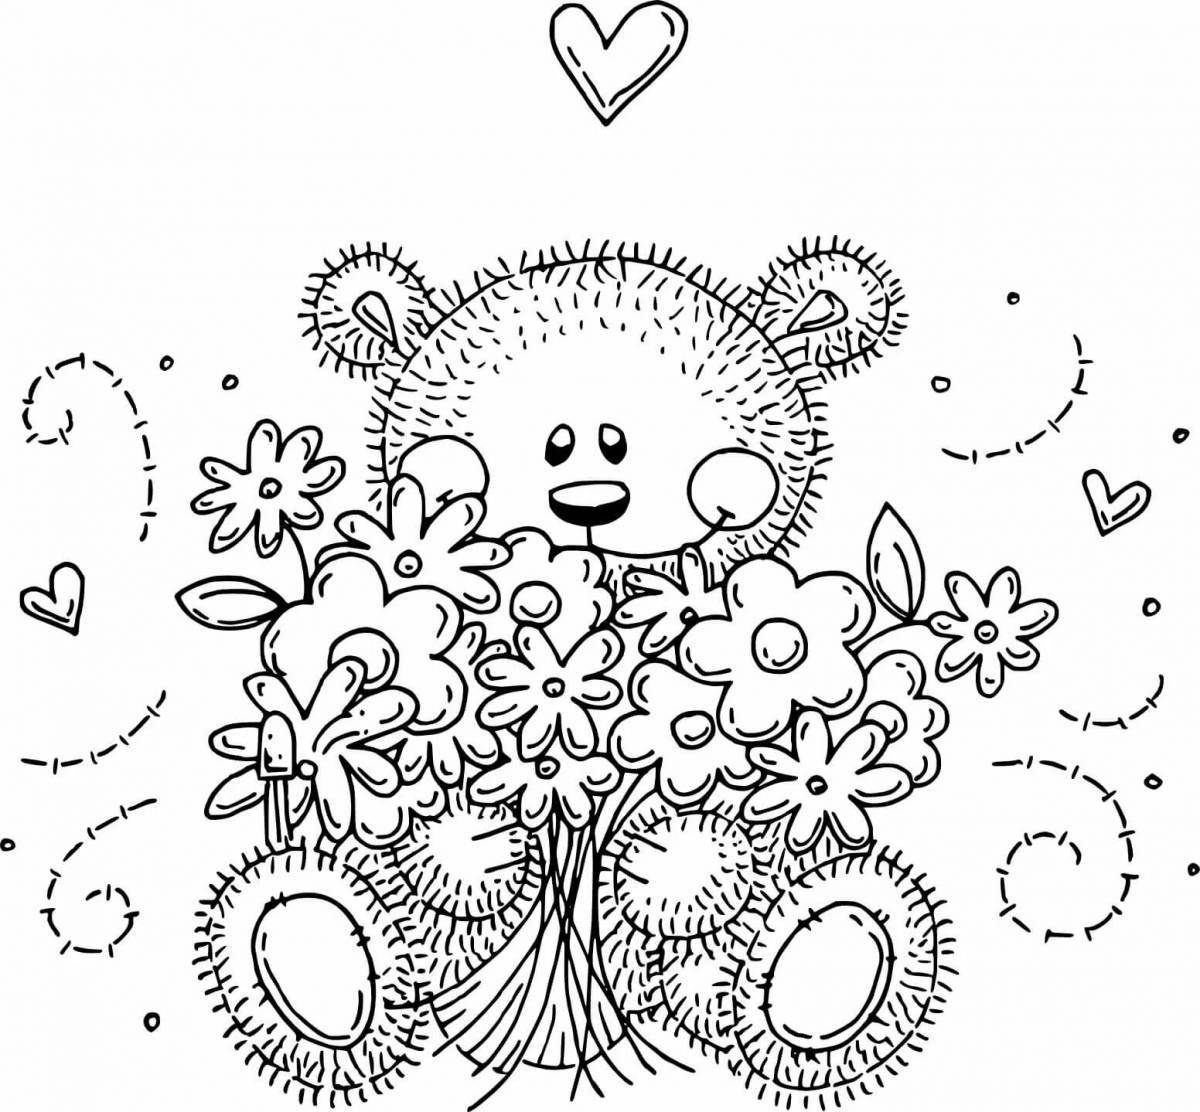 Cute bear with flowers